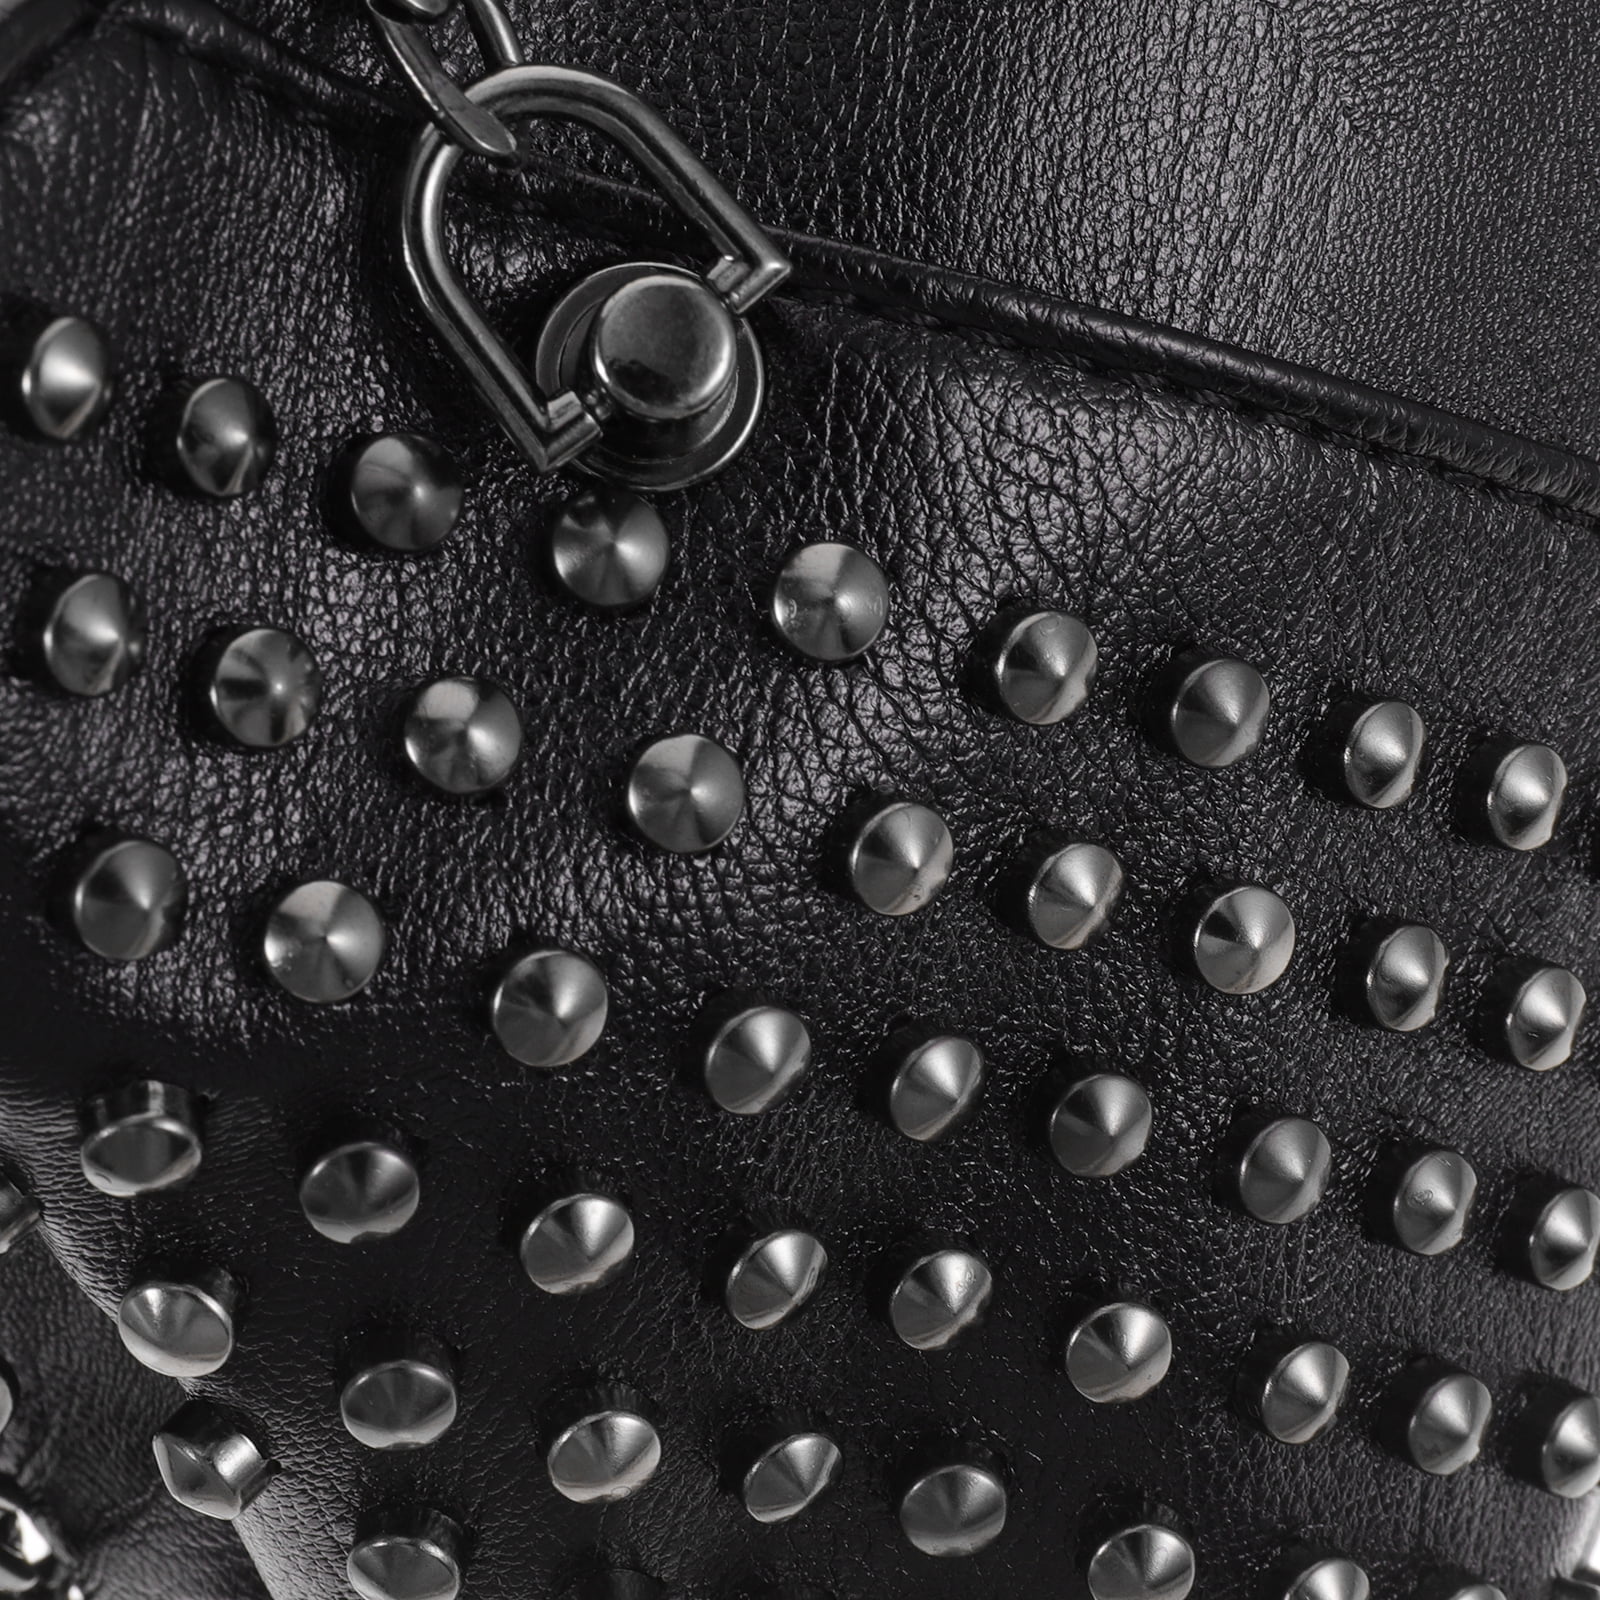 Burgundy Women's Studded Leather Stylish Shoulder Purse Tassel | eBay